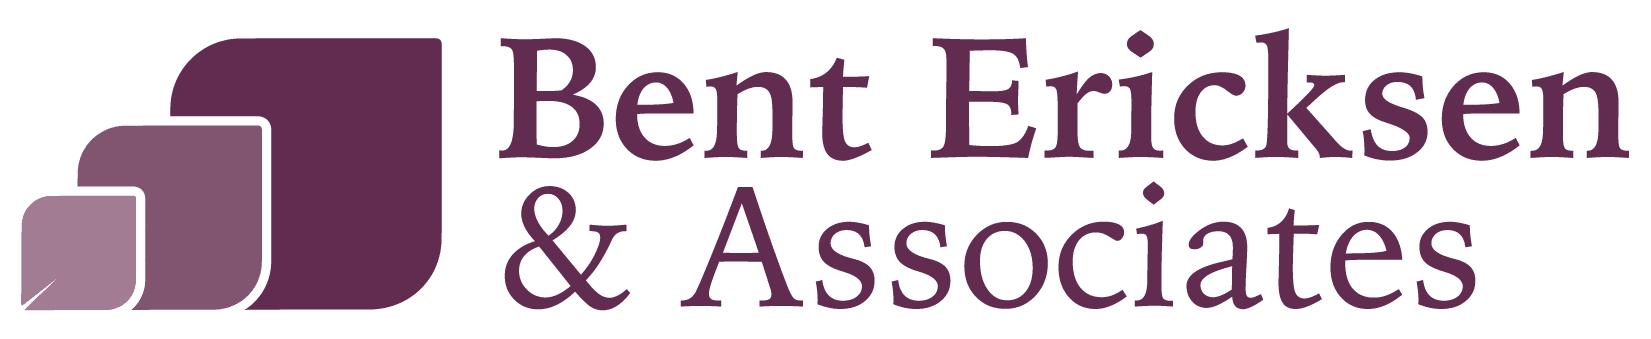 Bent-Ericksen-Associates-Logo-01